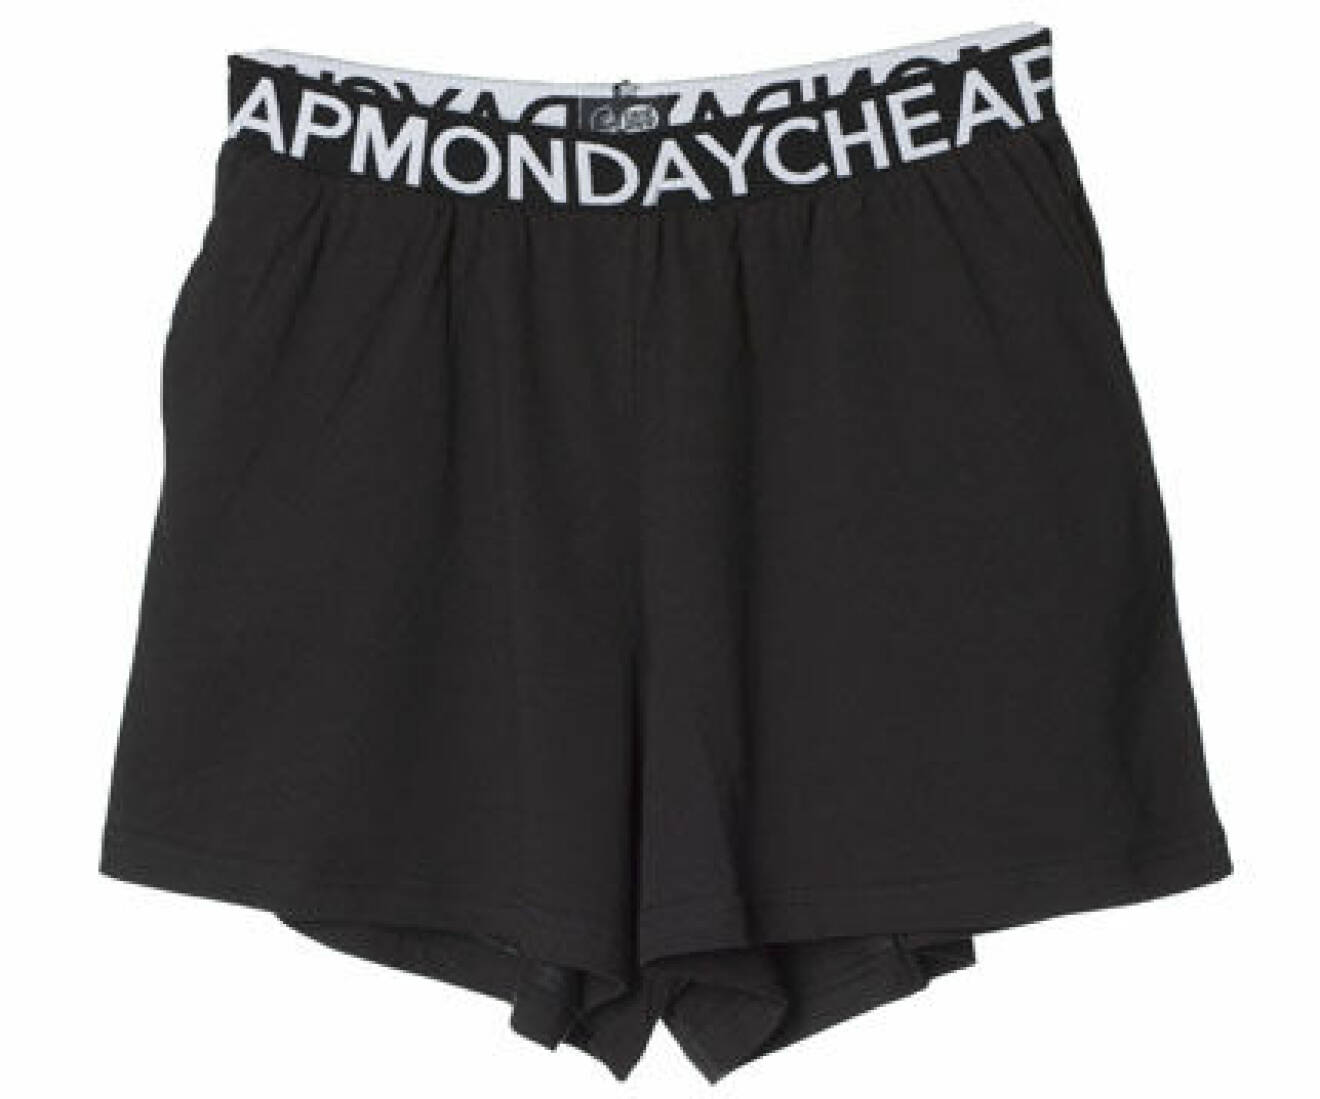 4. Shorts, 300 kr, Cheap Monday Weekday